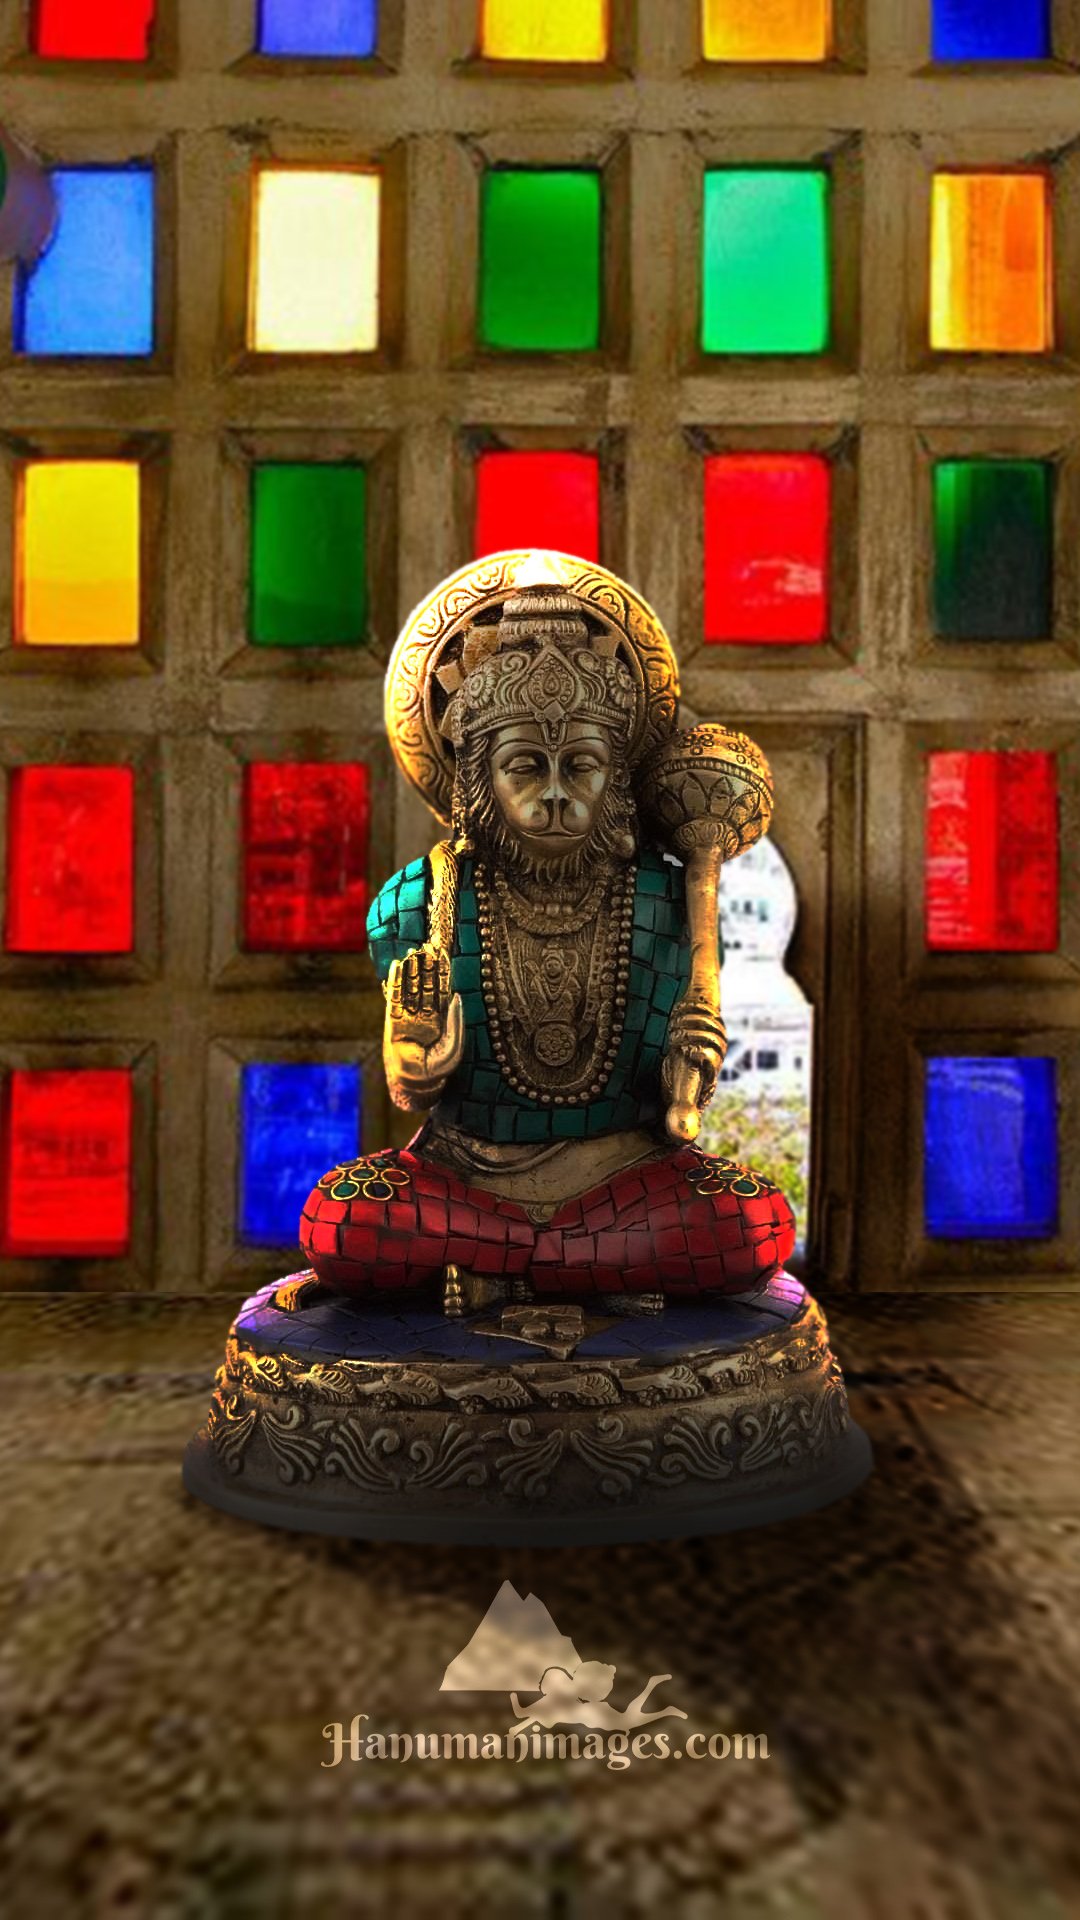 bhagwan hanuman image in colorful light